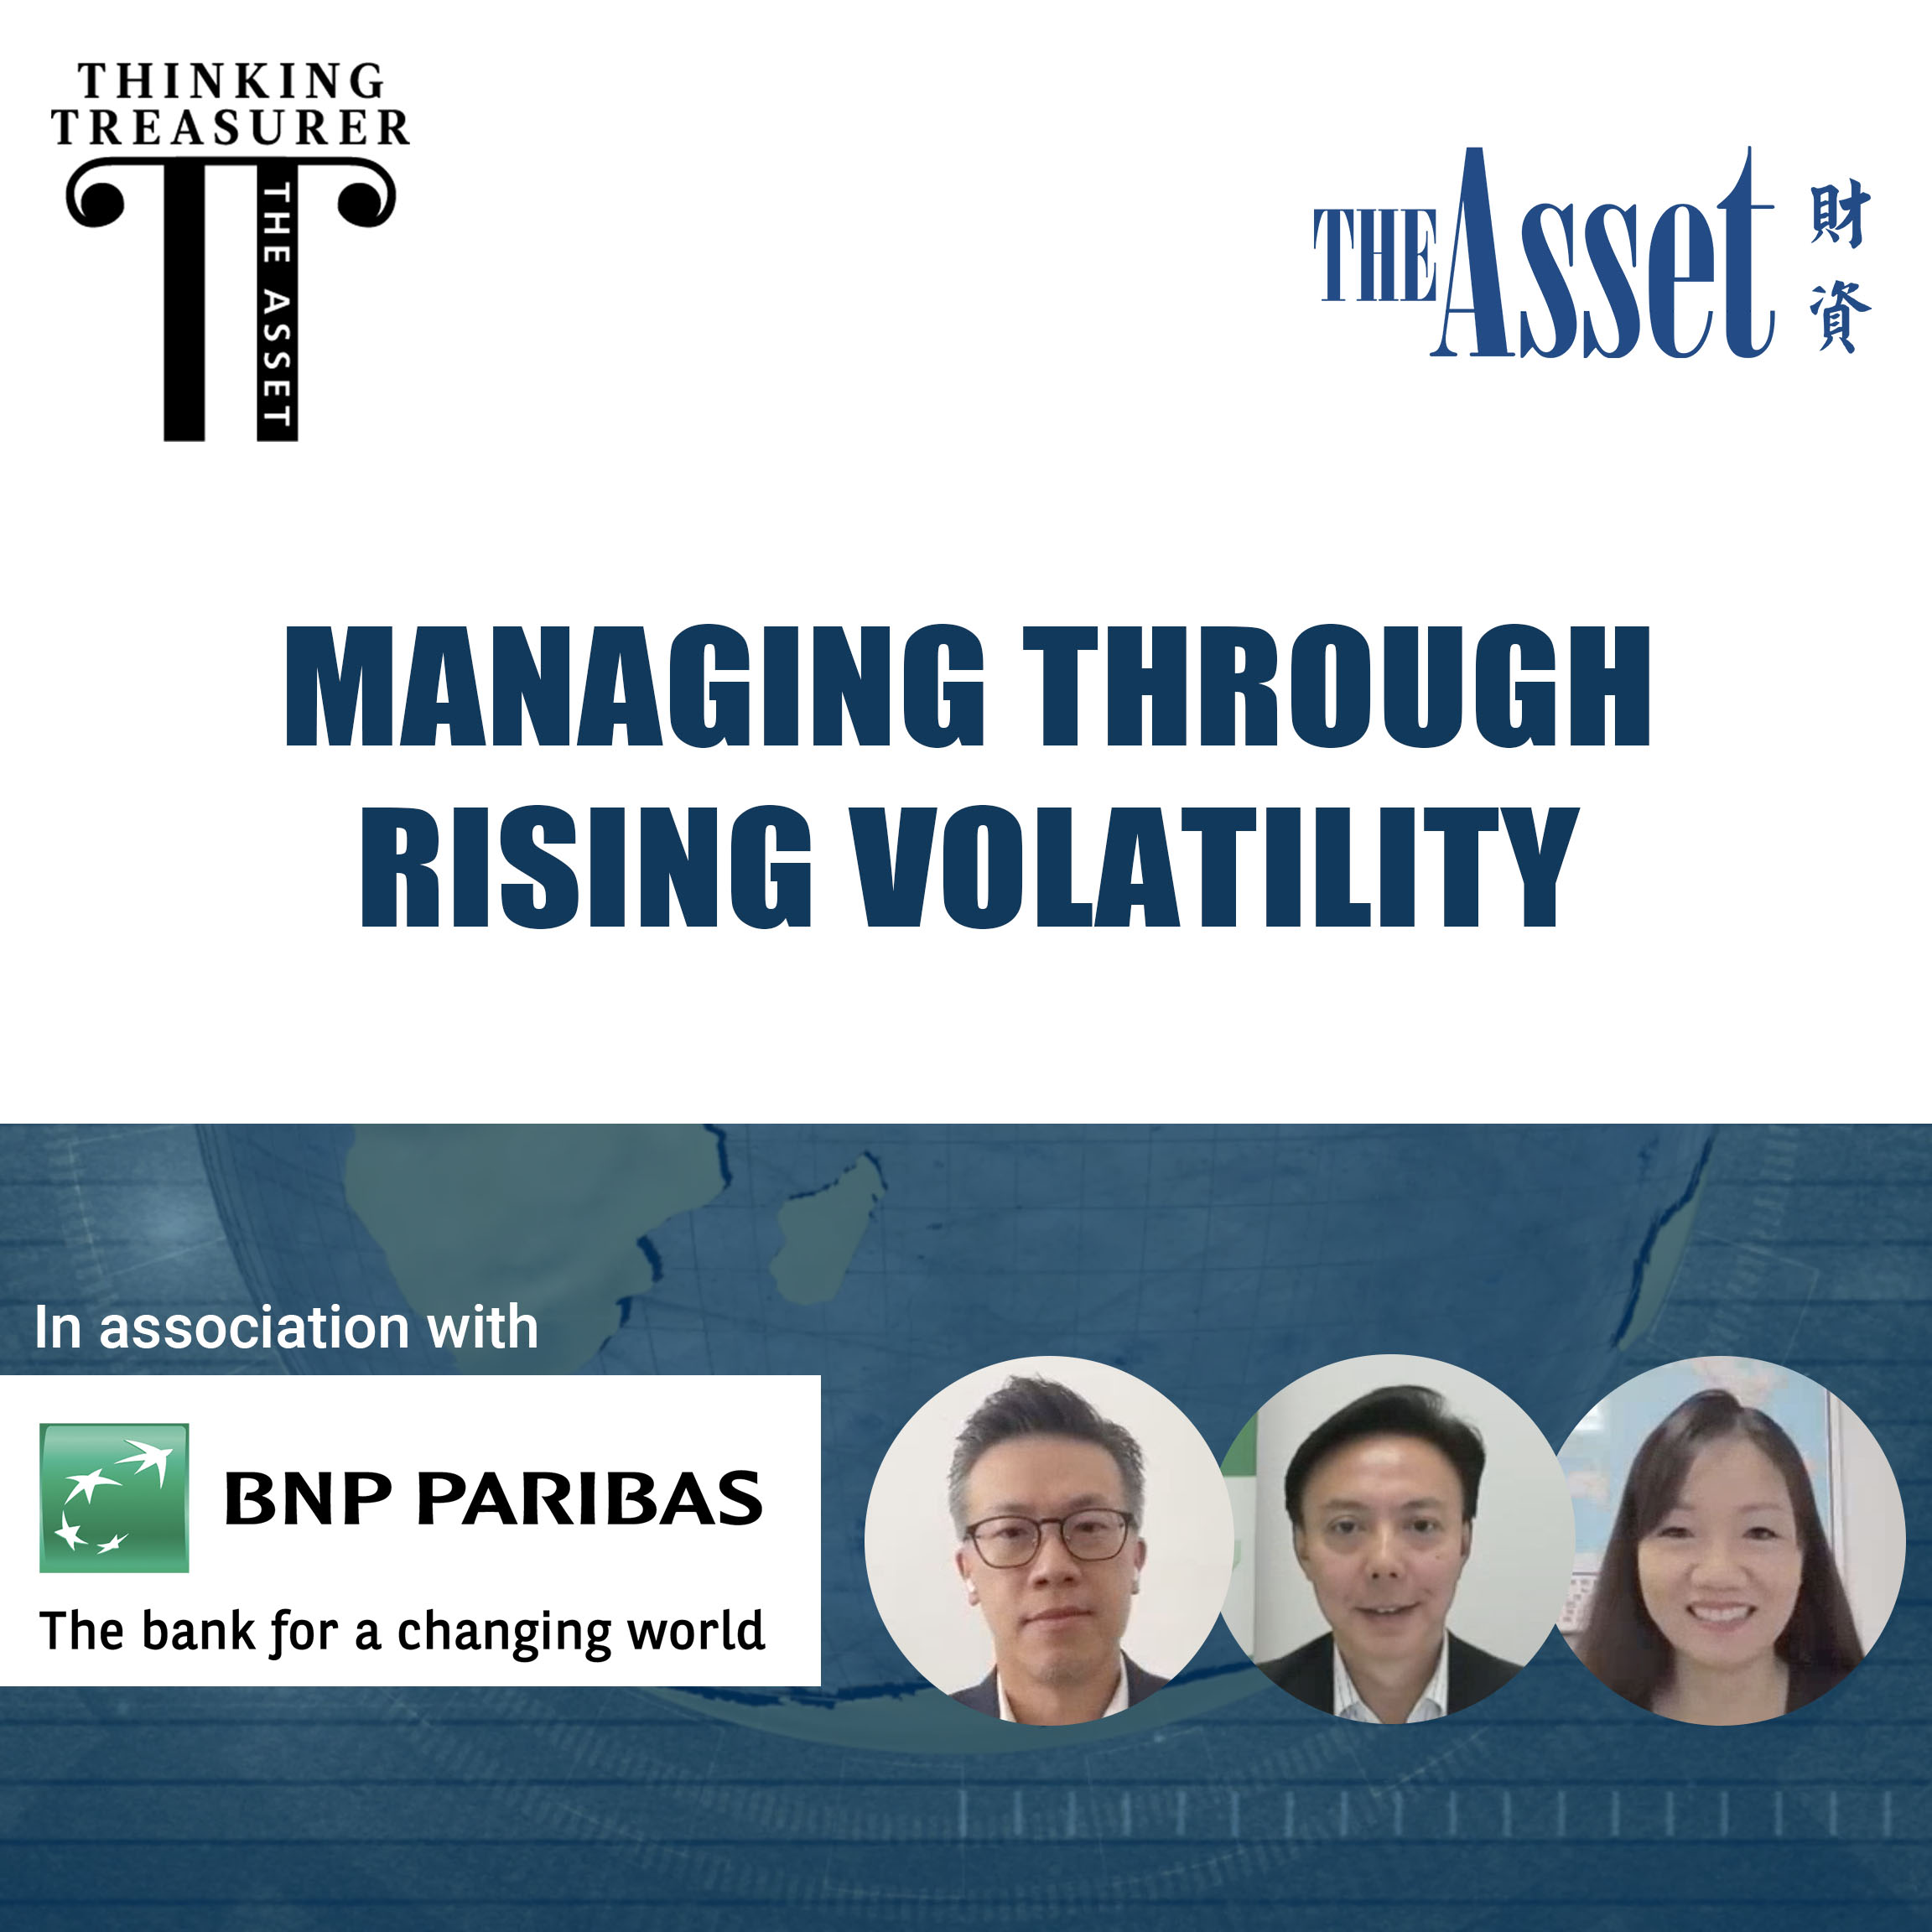 Thinking Treasurer series - Managing through rising volatility